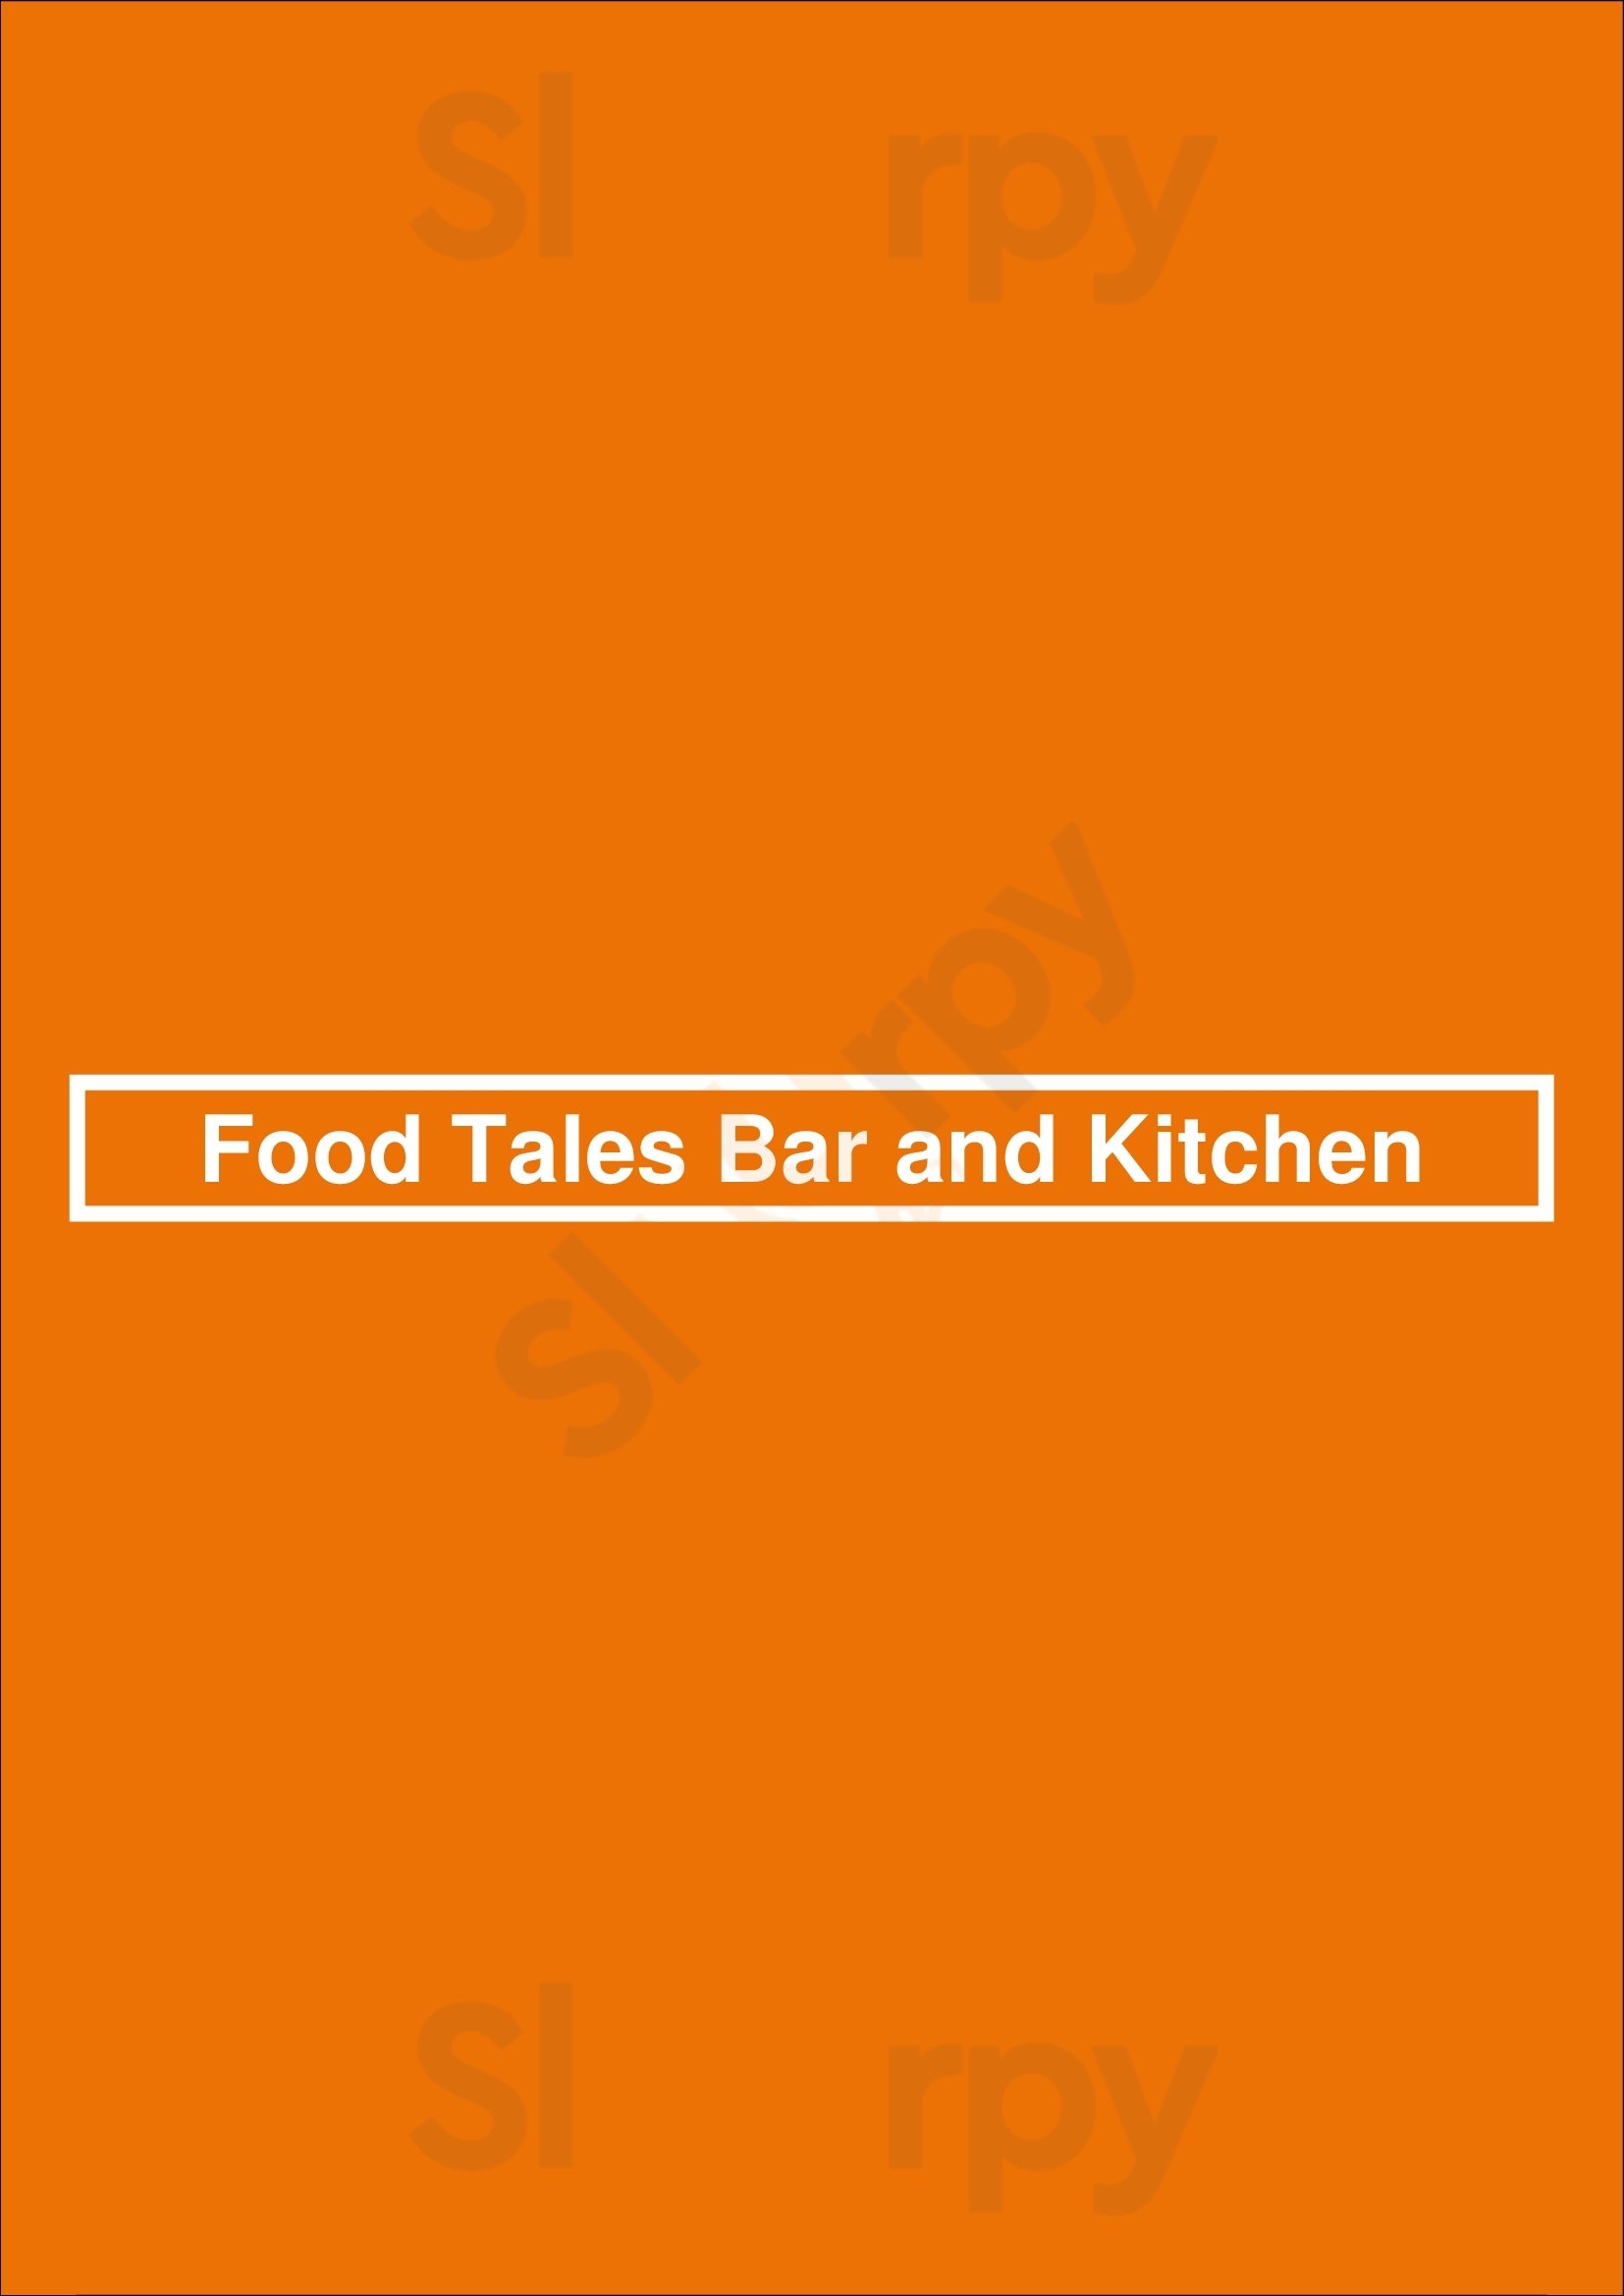 Food Tales Bar And Kitchen Melbourne Menu - 1